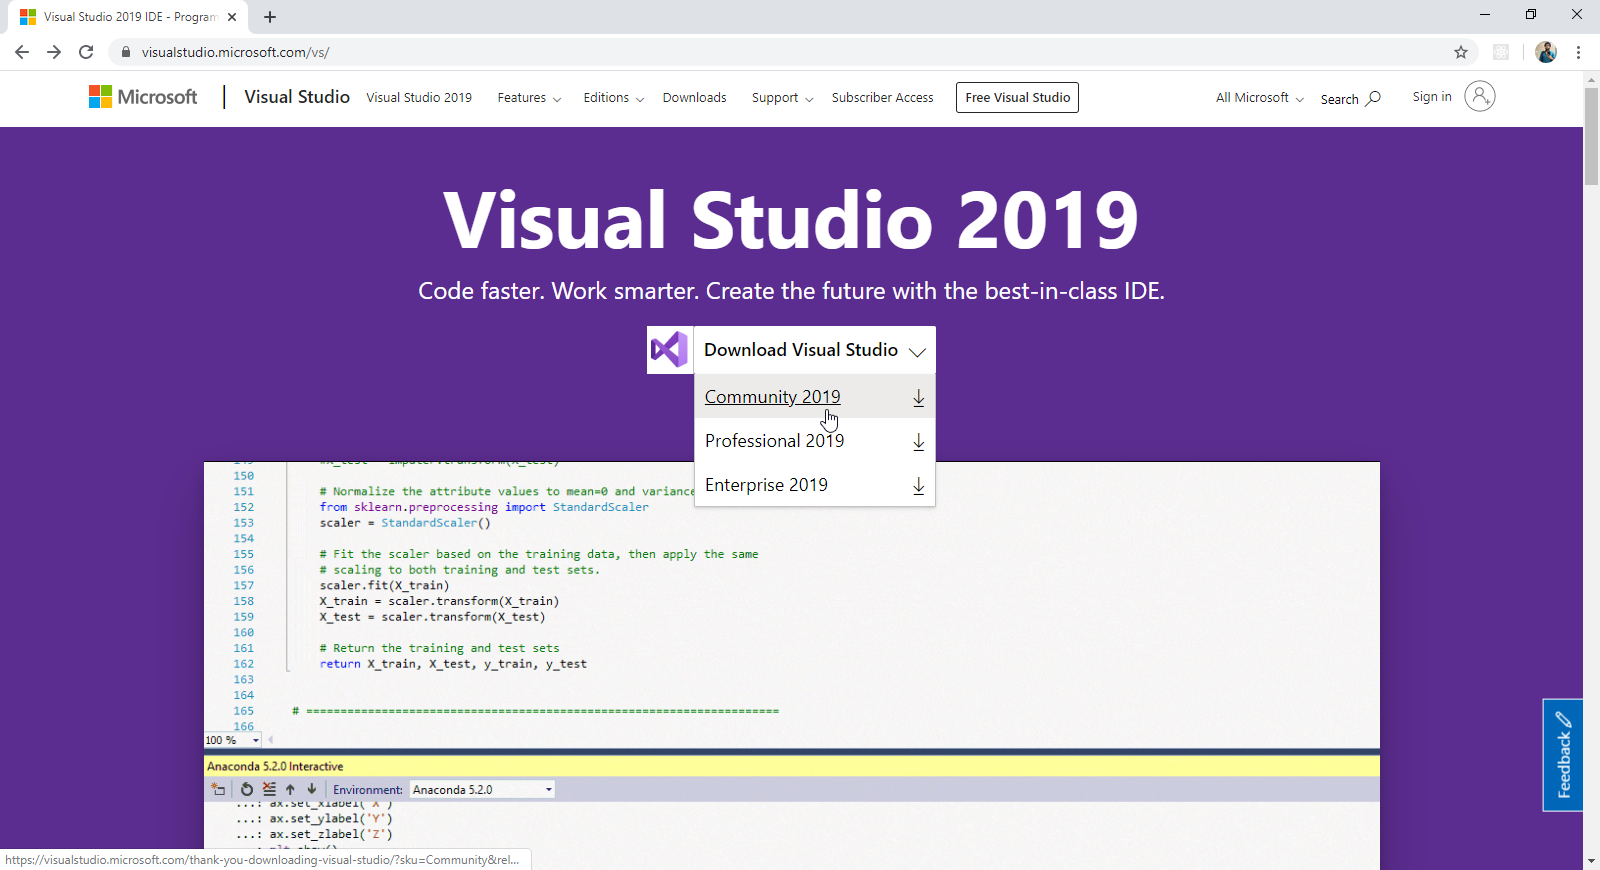 How to Install Visual Studio 2019 on Windows 10